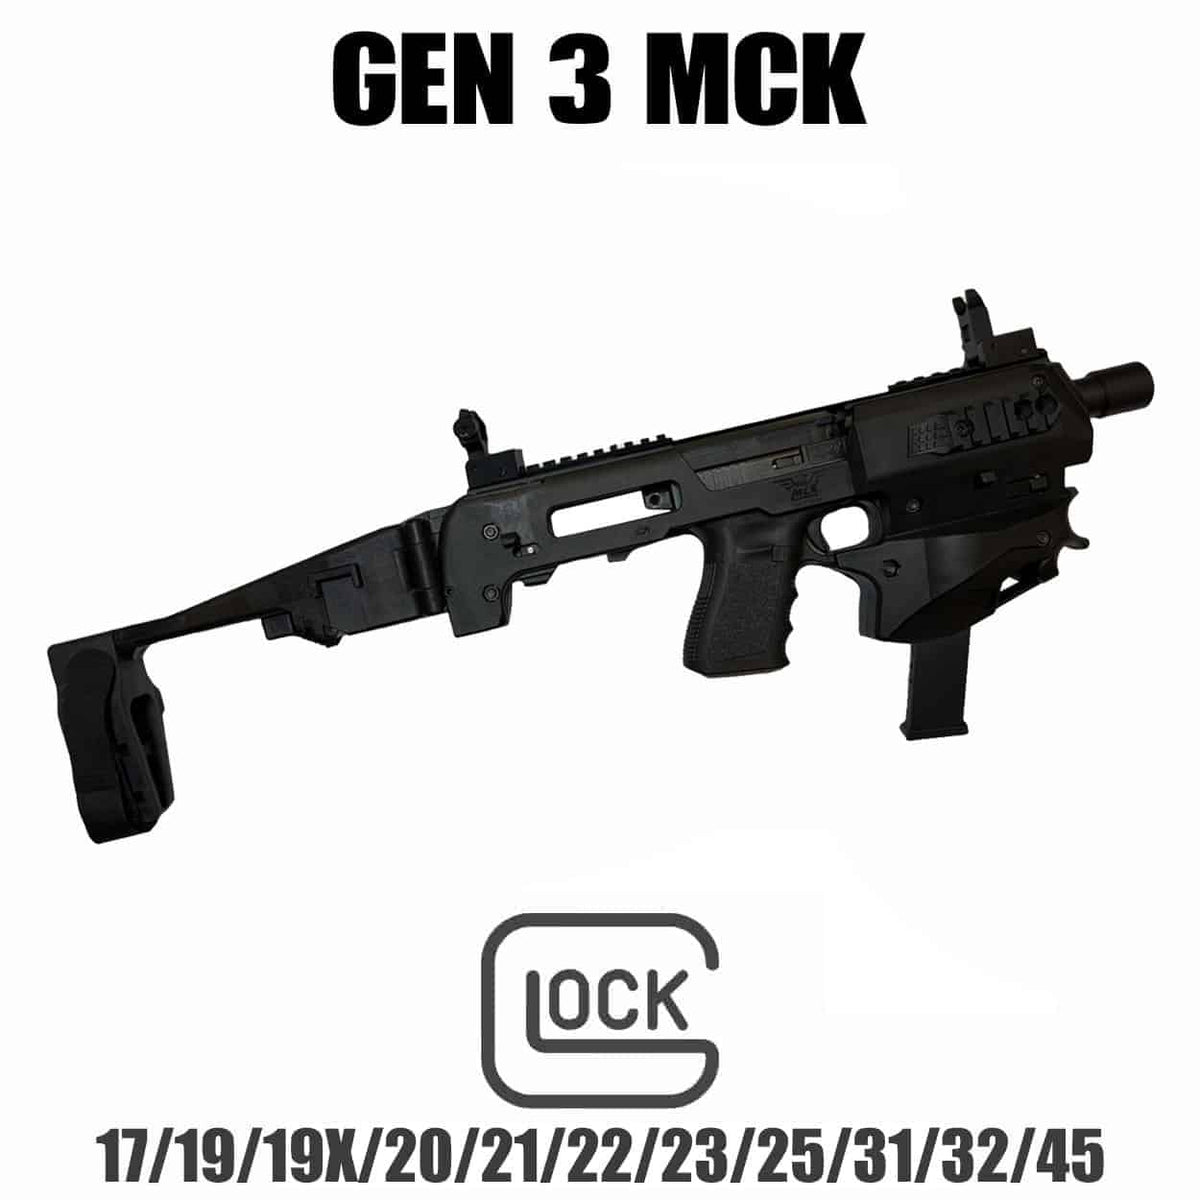 MCK 3.0 | GEN 3 MCK | MICRO CONVERSION KIT | GLOCK 17 / 19 / 19X / 20 / 21 / 22 / 23 / 25 / 31 / 32 / 45 / 47